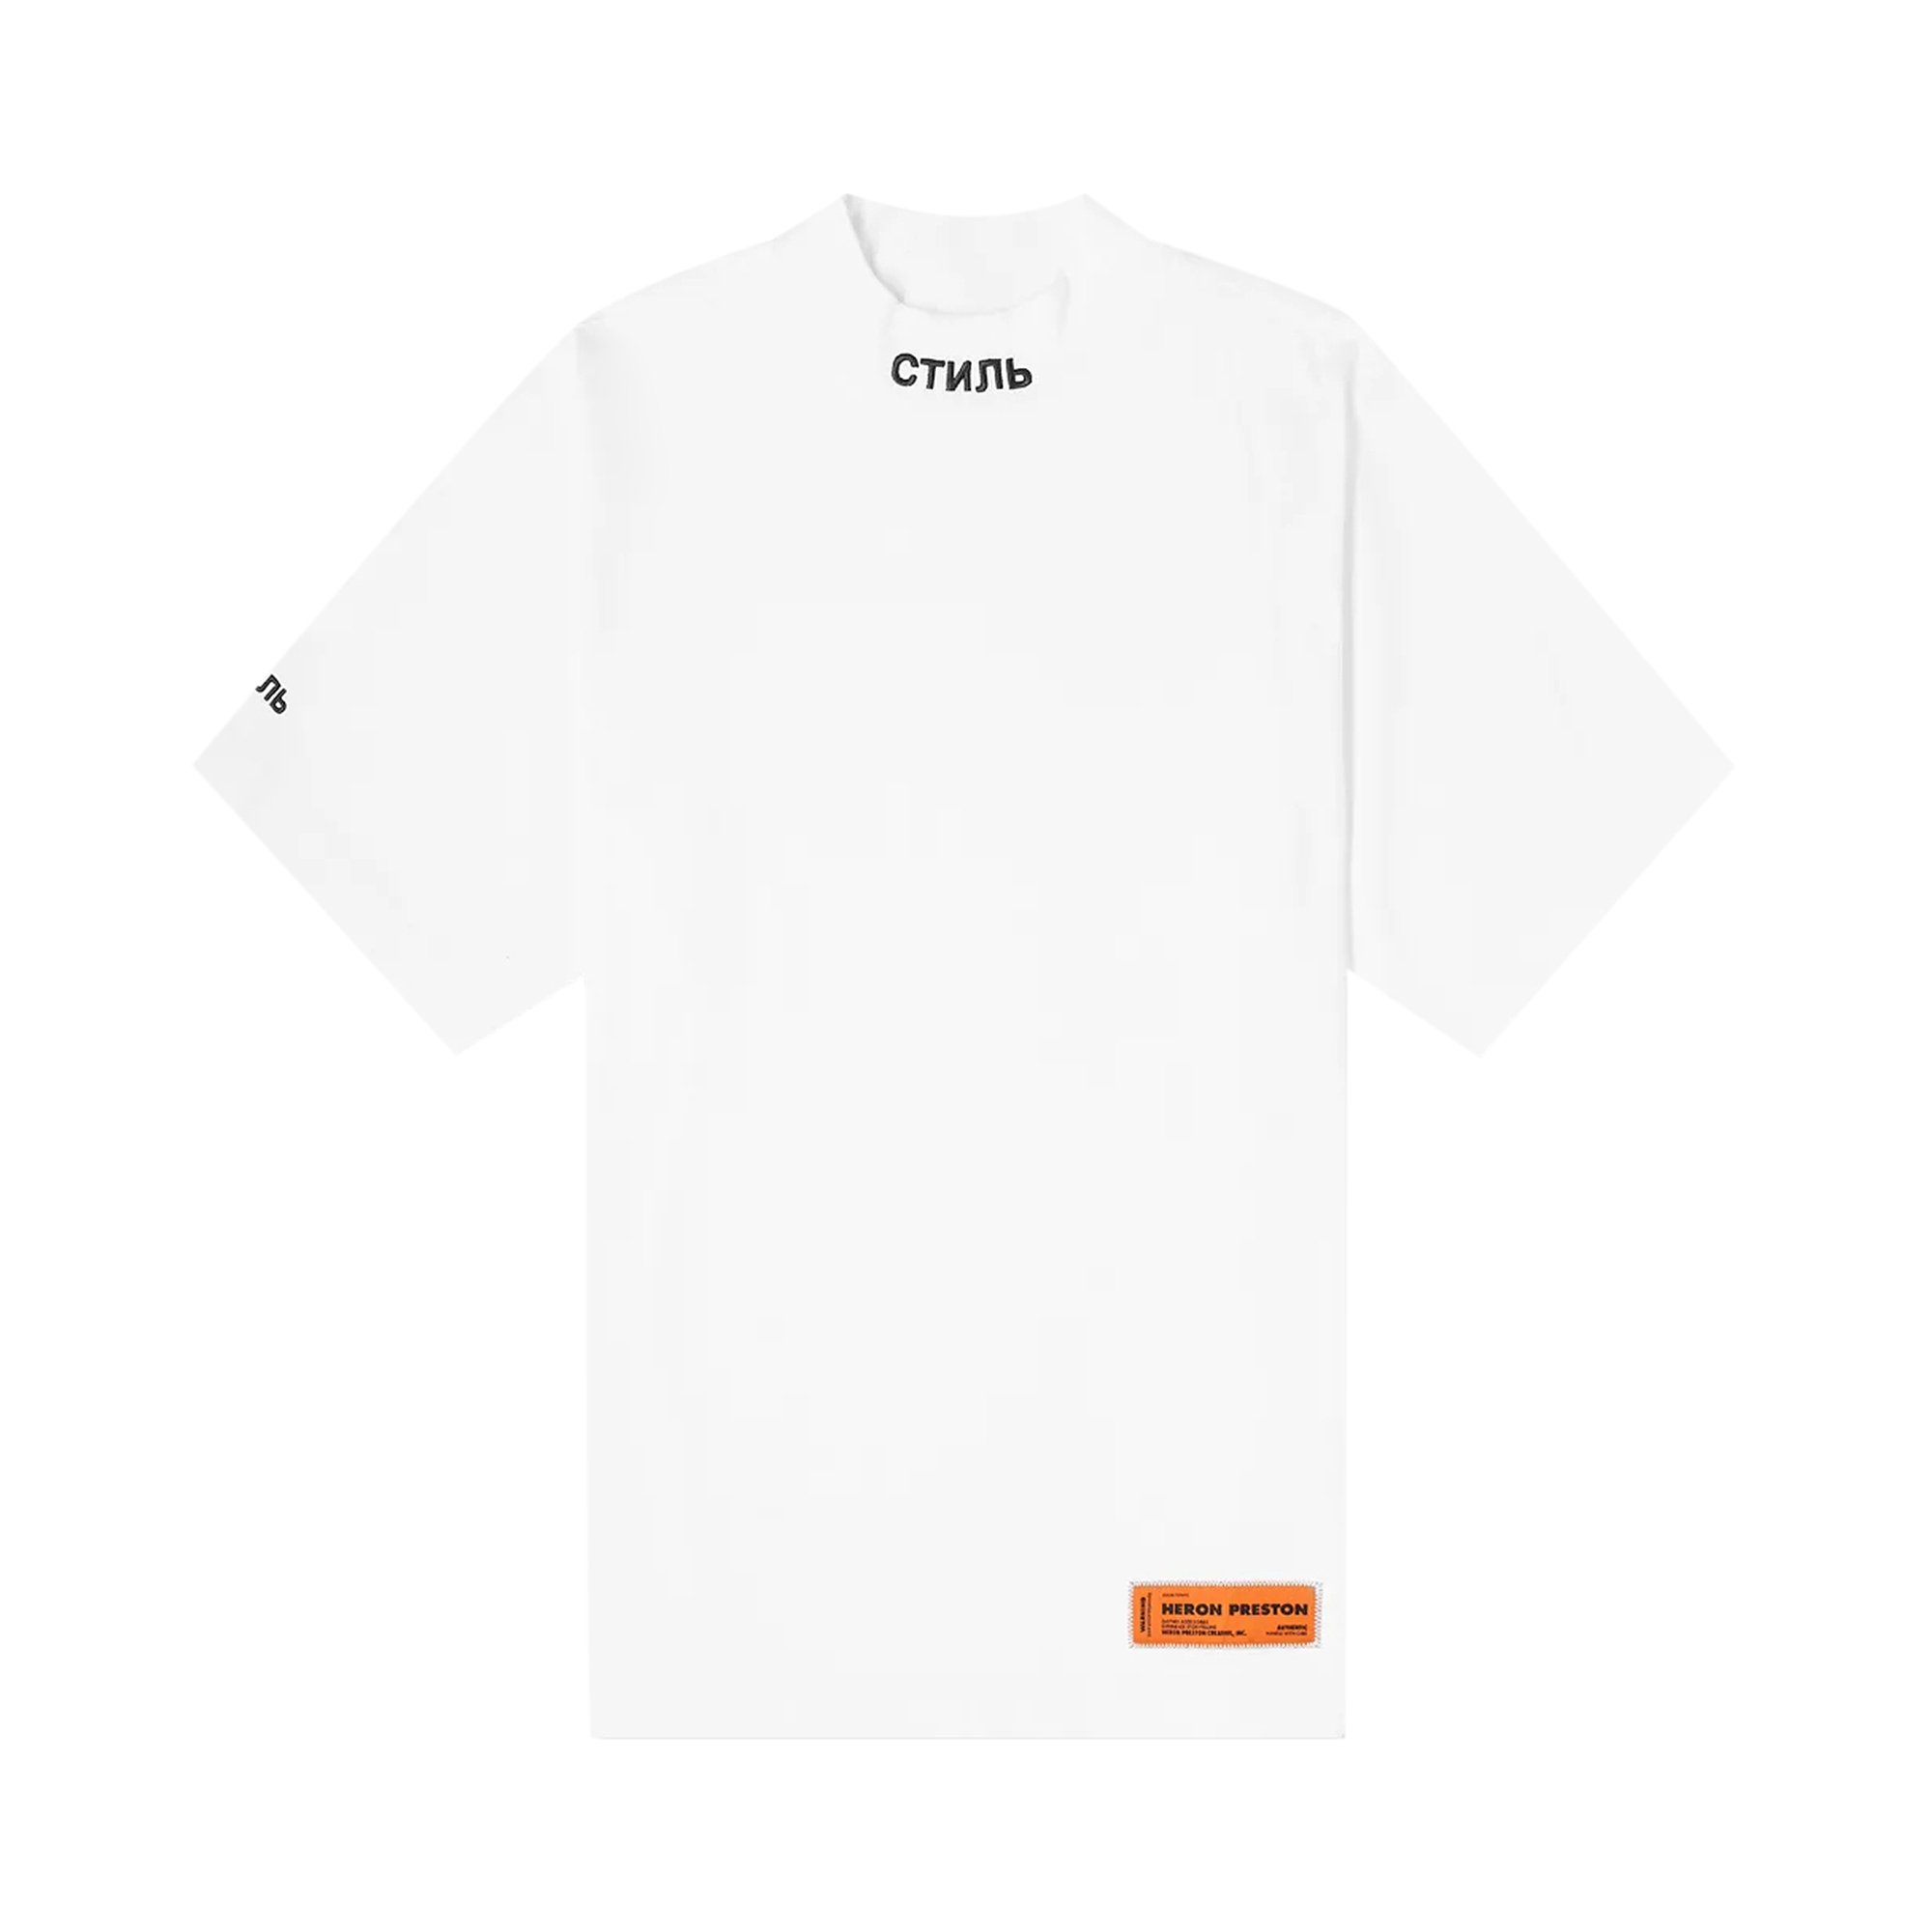 Heron Preston CTNMB Logo Oversize T-Shirt 'White' | GOAT